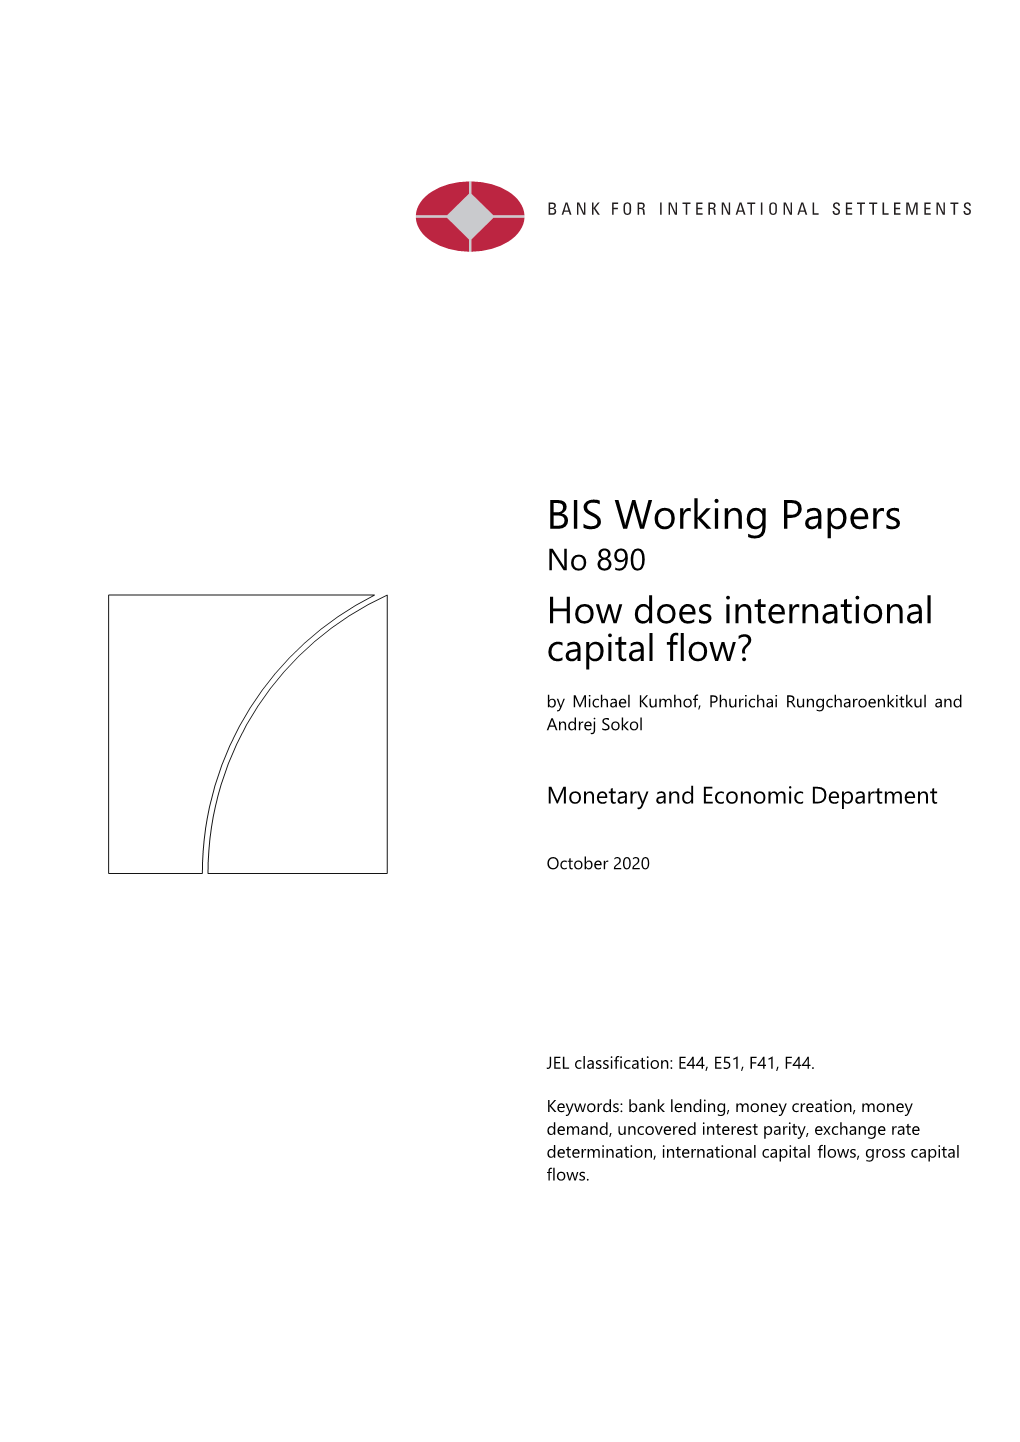 BIS Working Papers No 890 How Does International Capital Flow? by Michael Kumhof, Phurichai Rungcharoenkitkul and Andrej Sokol